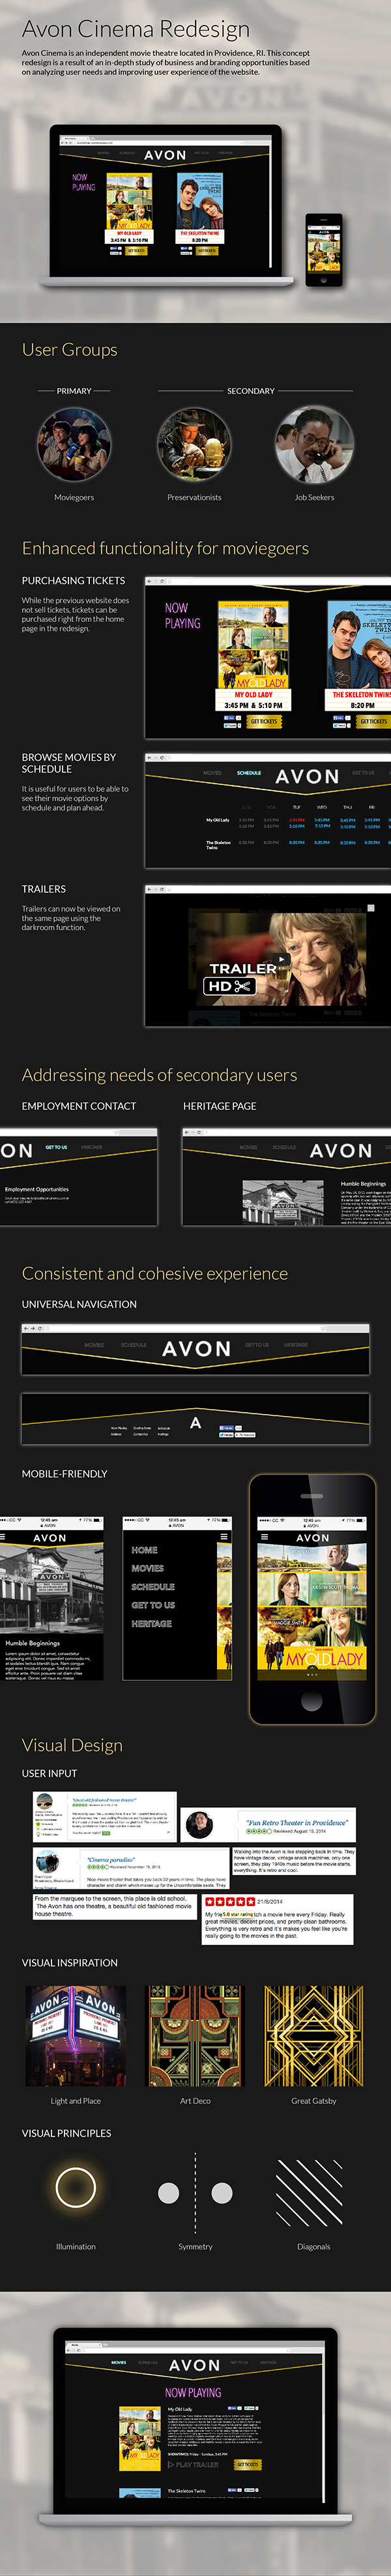 Avon Cinema Web Website redesign uiux Movies tickets Retro flavor old hollywood Great Gatsby